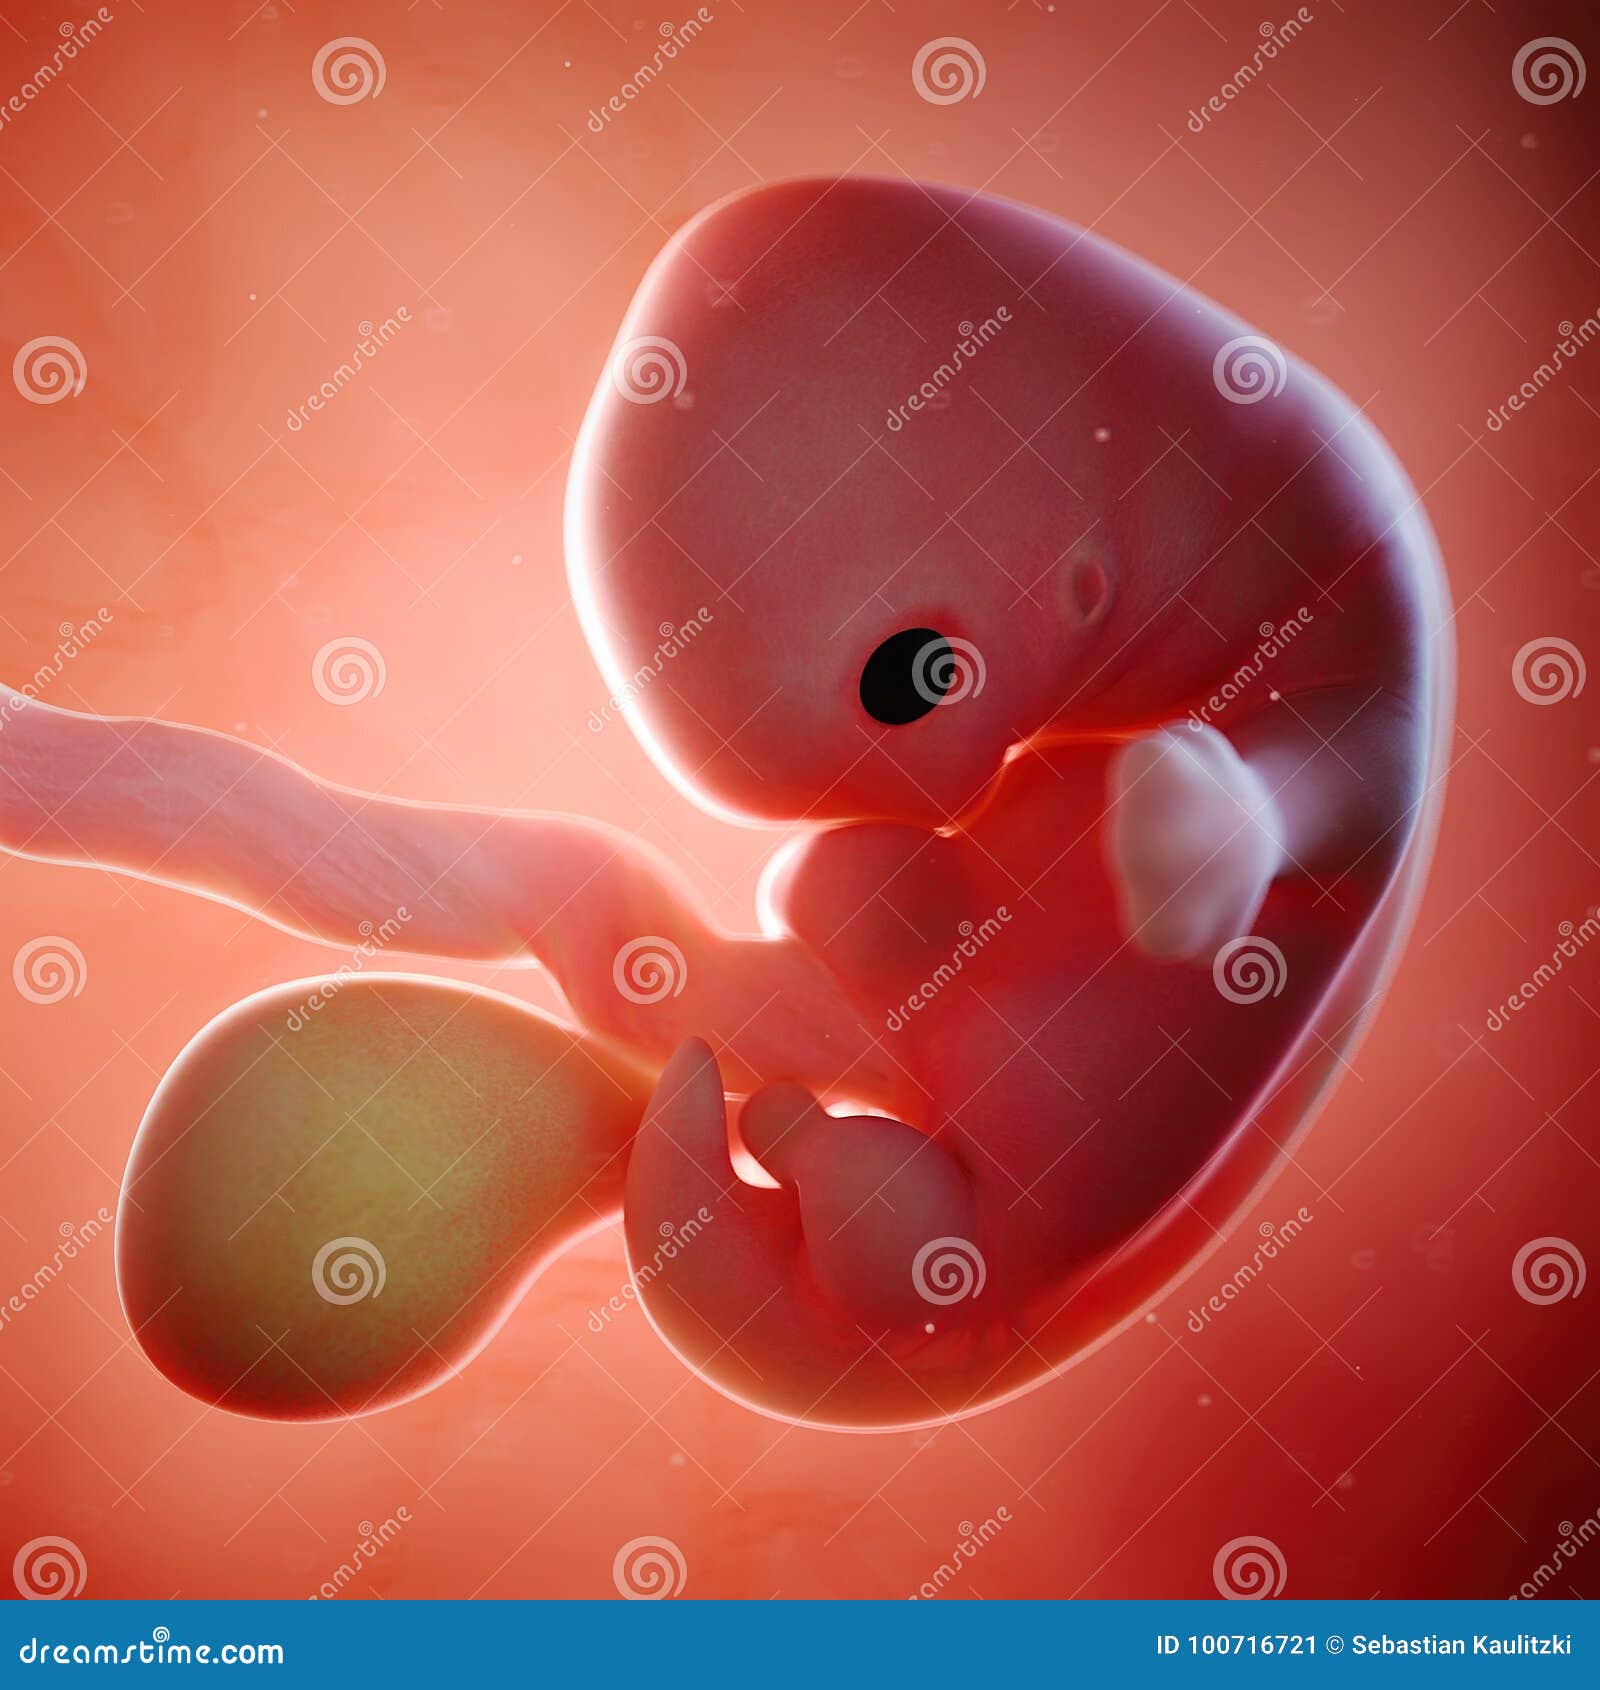 a fetus week 7